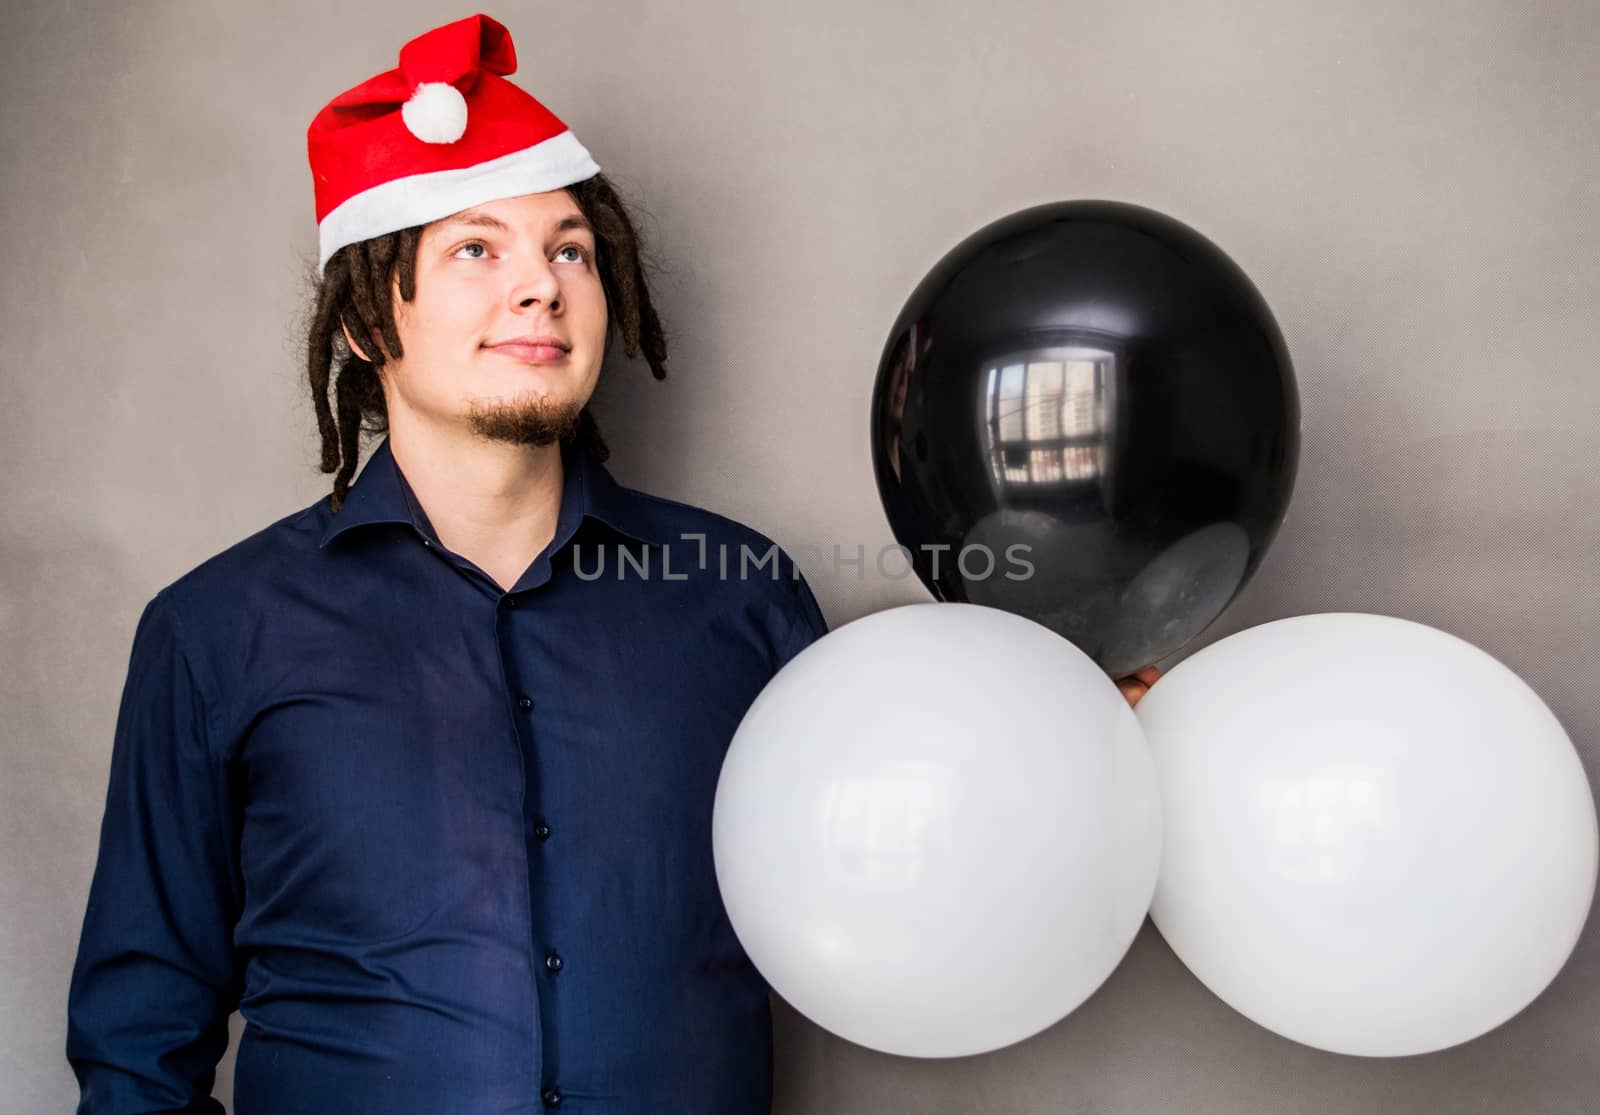 yong european man with balloons in santa hat by Desperada